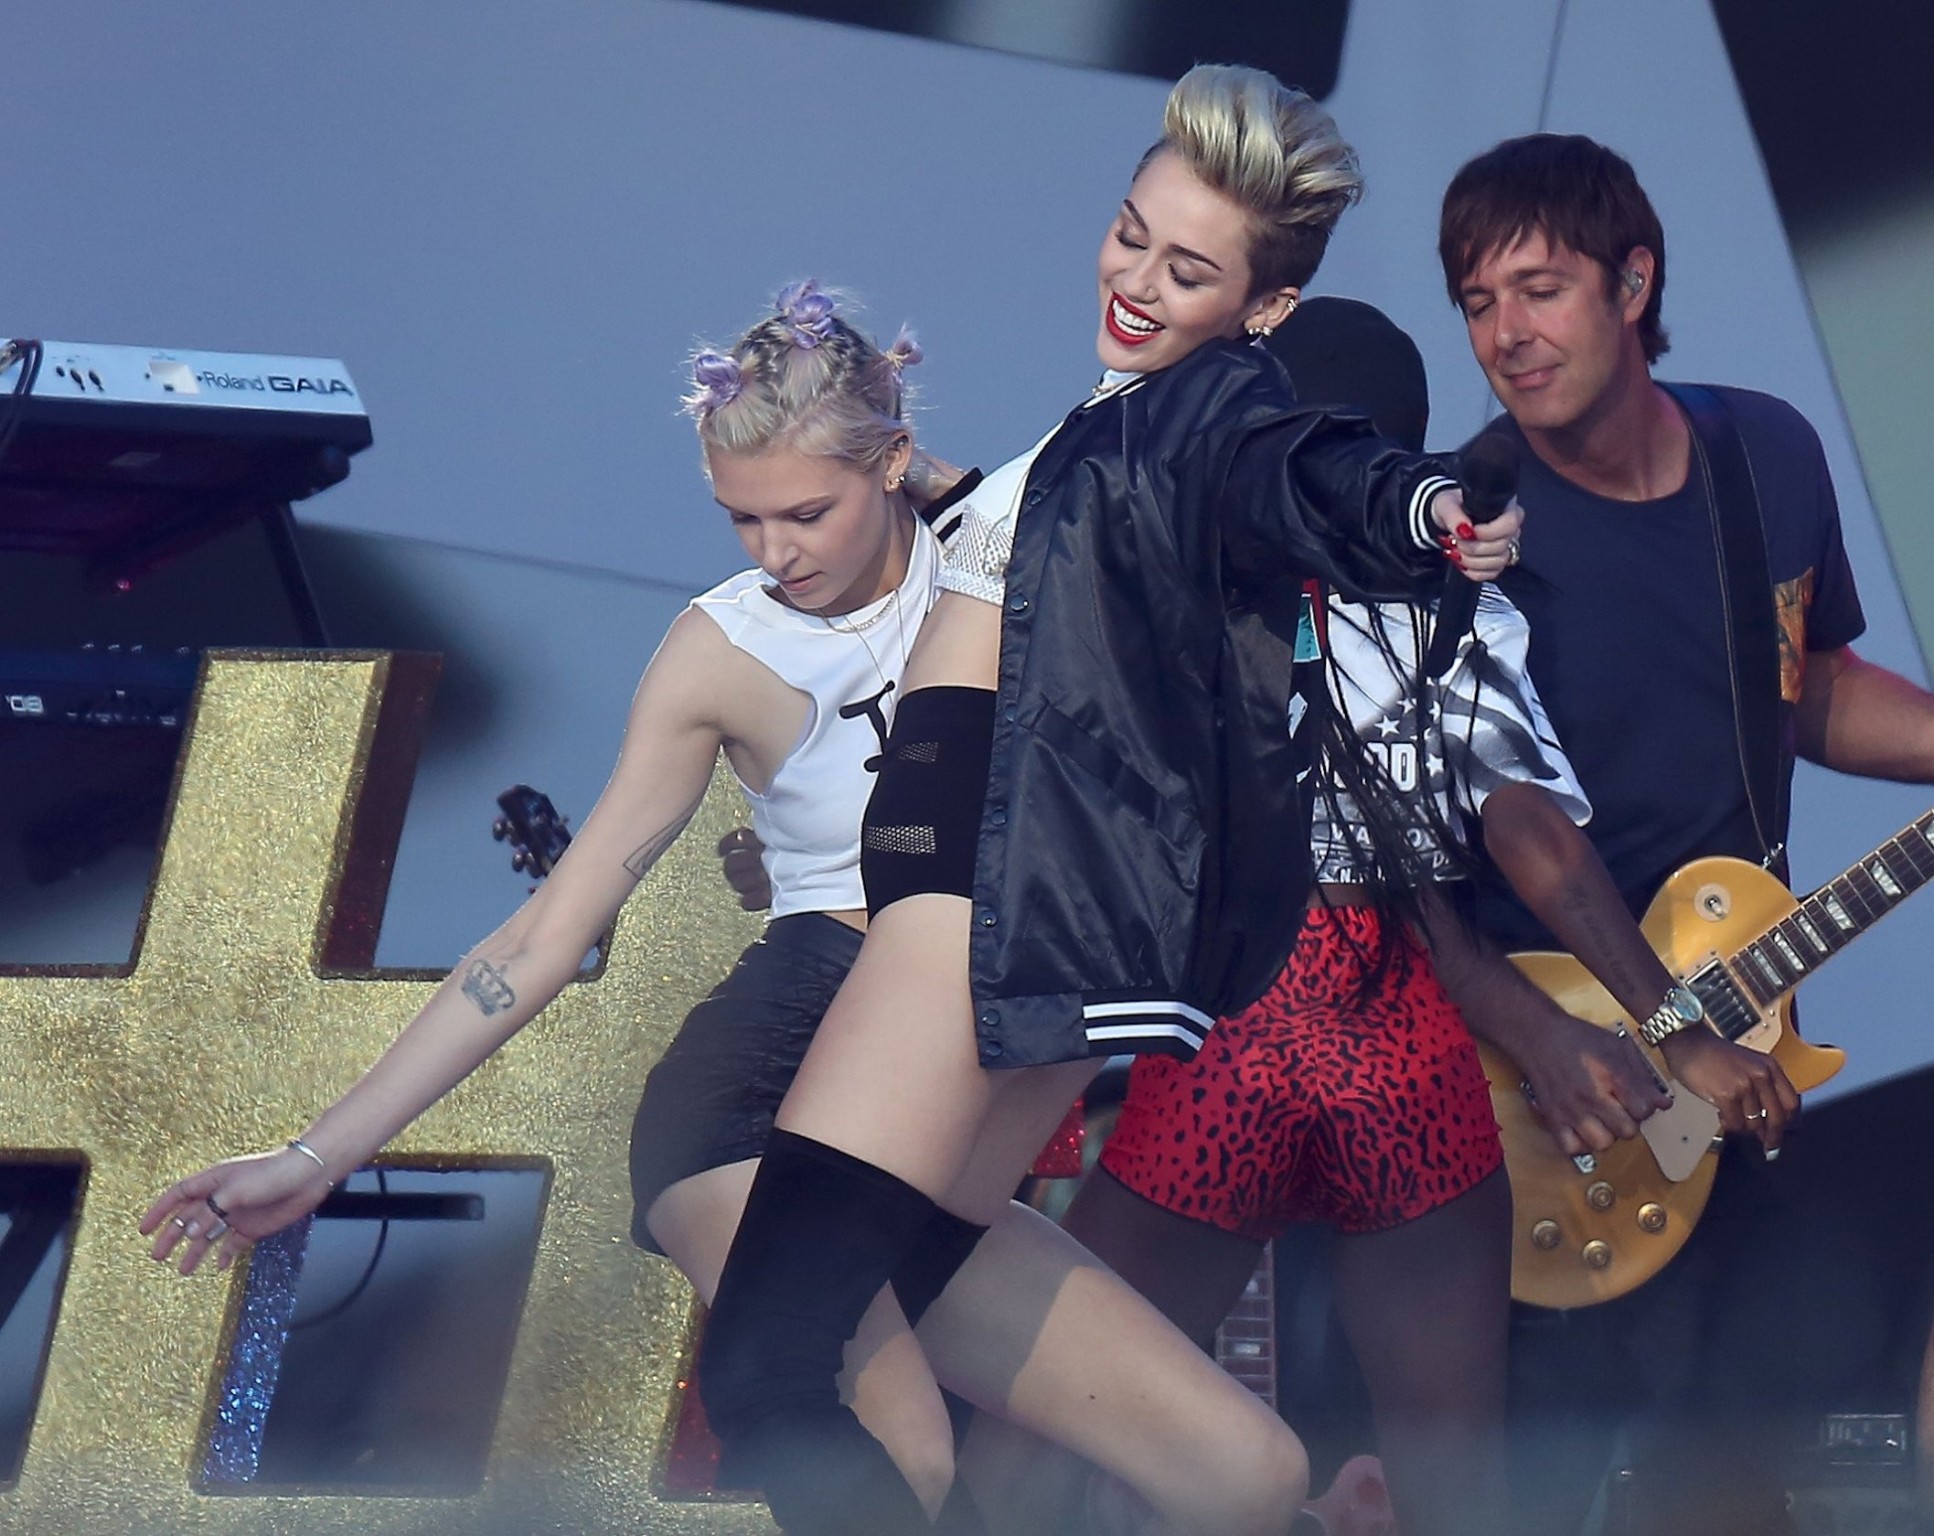 Miley cyrus in mutandine stivali fuck-me esibendosi al jimmy kimmel show
 #75227018